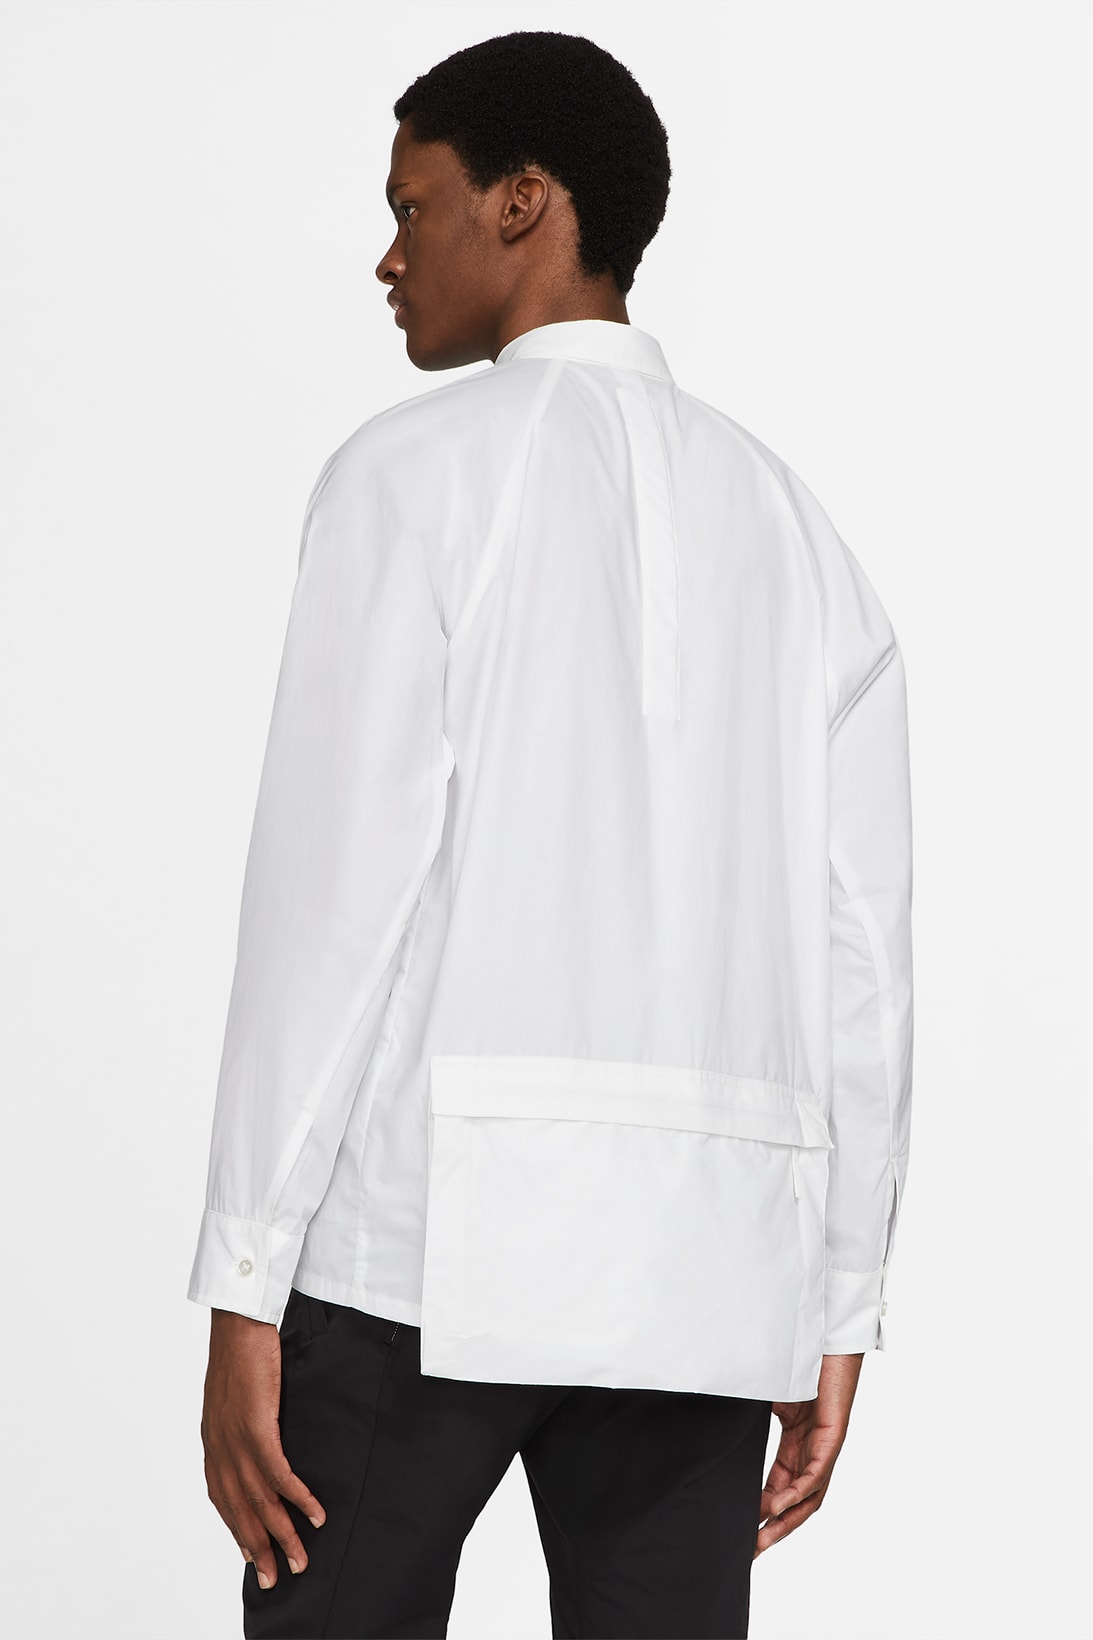 nike design exploration apparel collection long sleeve shirt